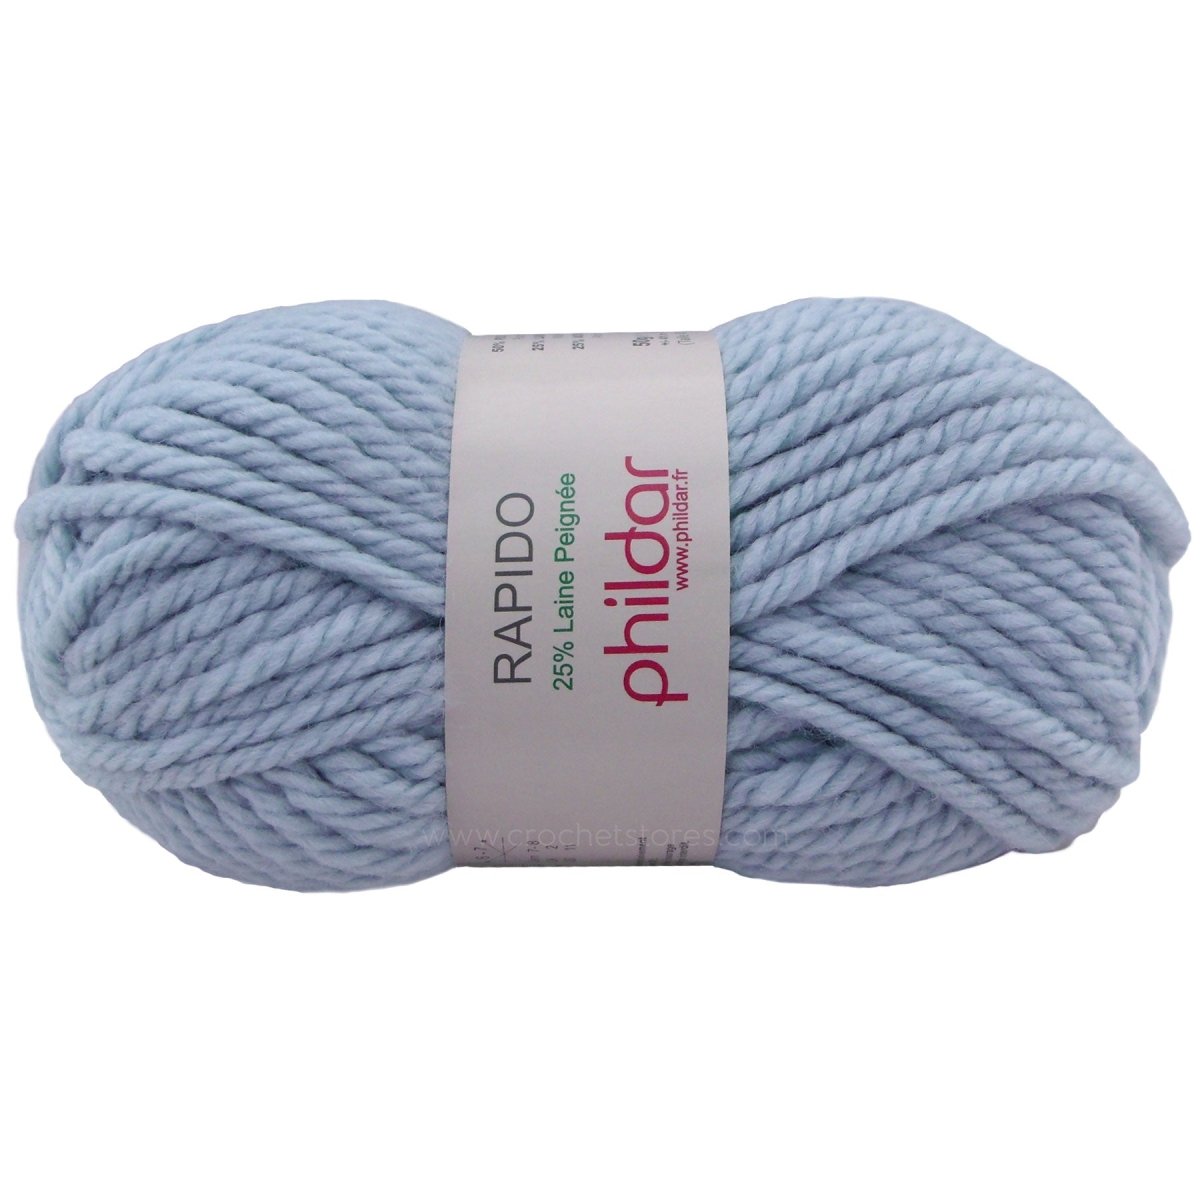 RAPIDO - Crochetstores500981-183307673813324